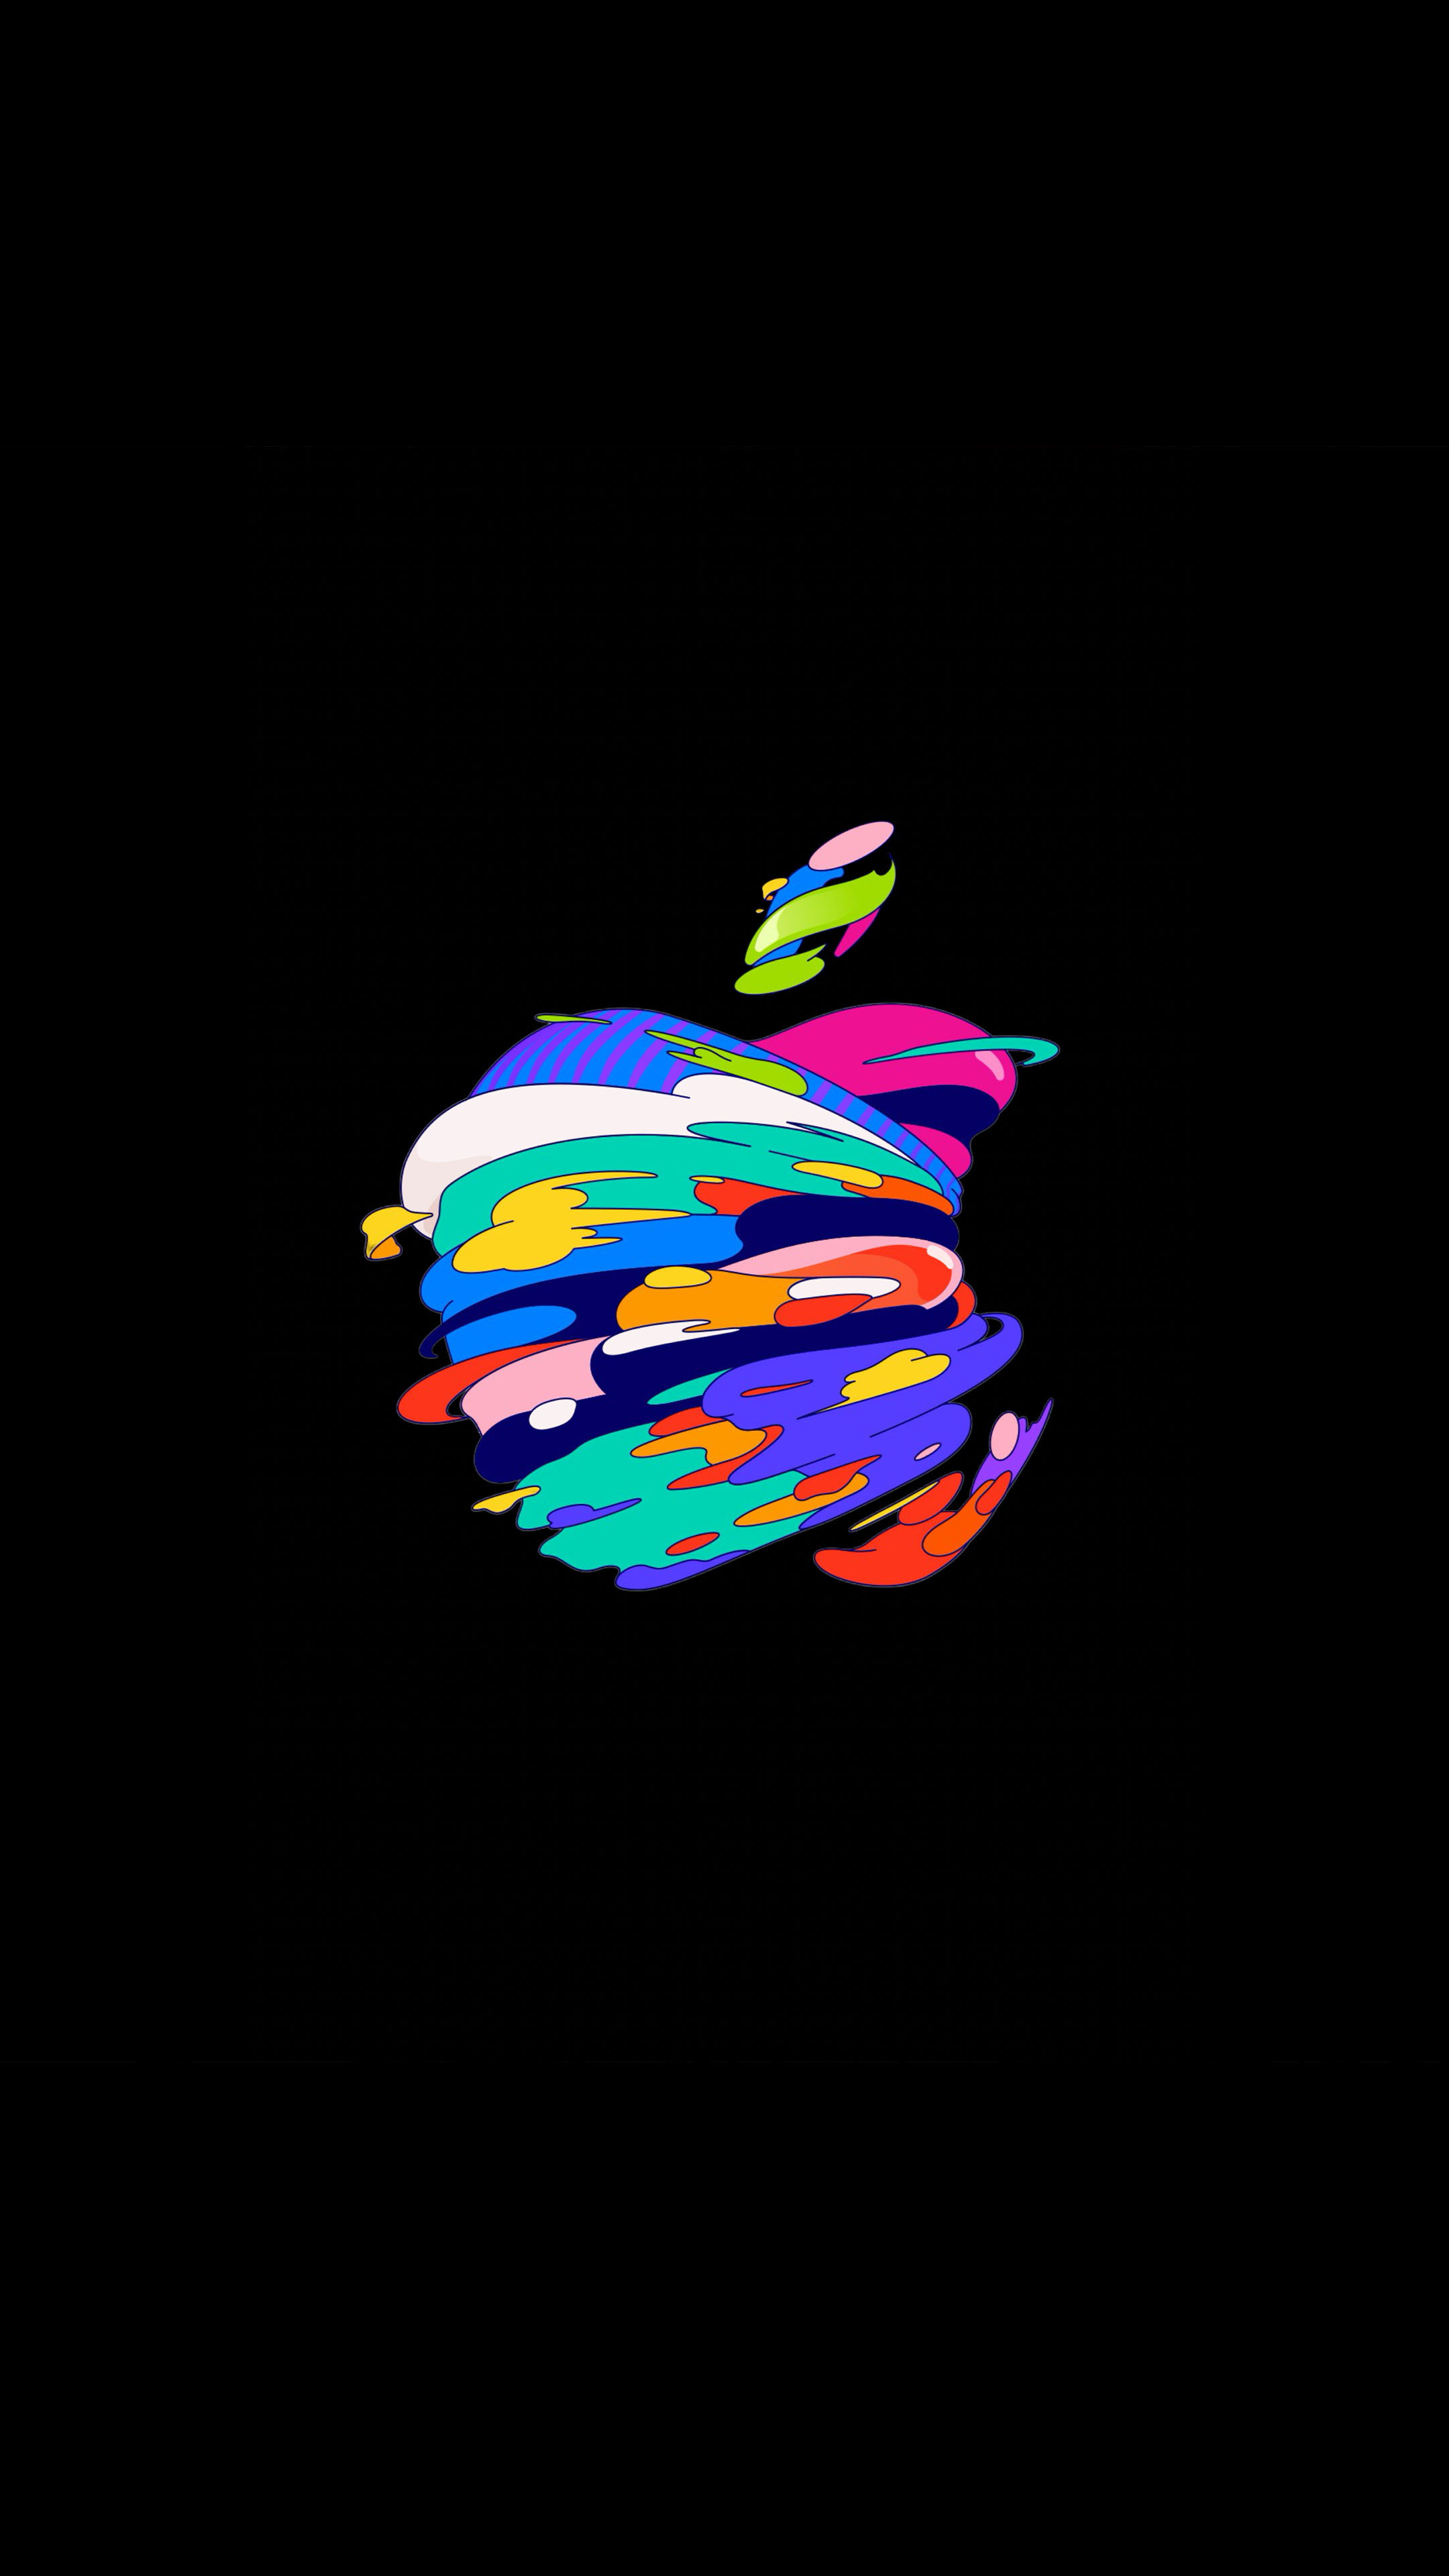 Colorful Apple Logo Dark Background 4K Ultra HD Mobile Wallpaper